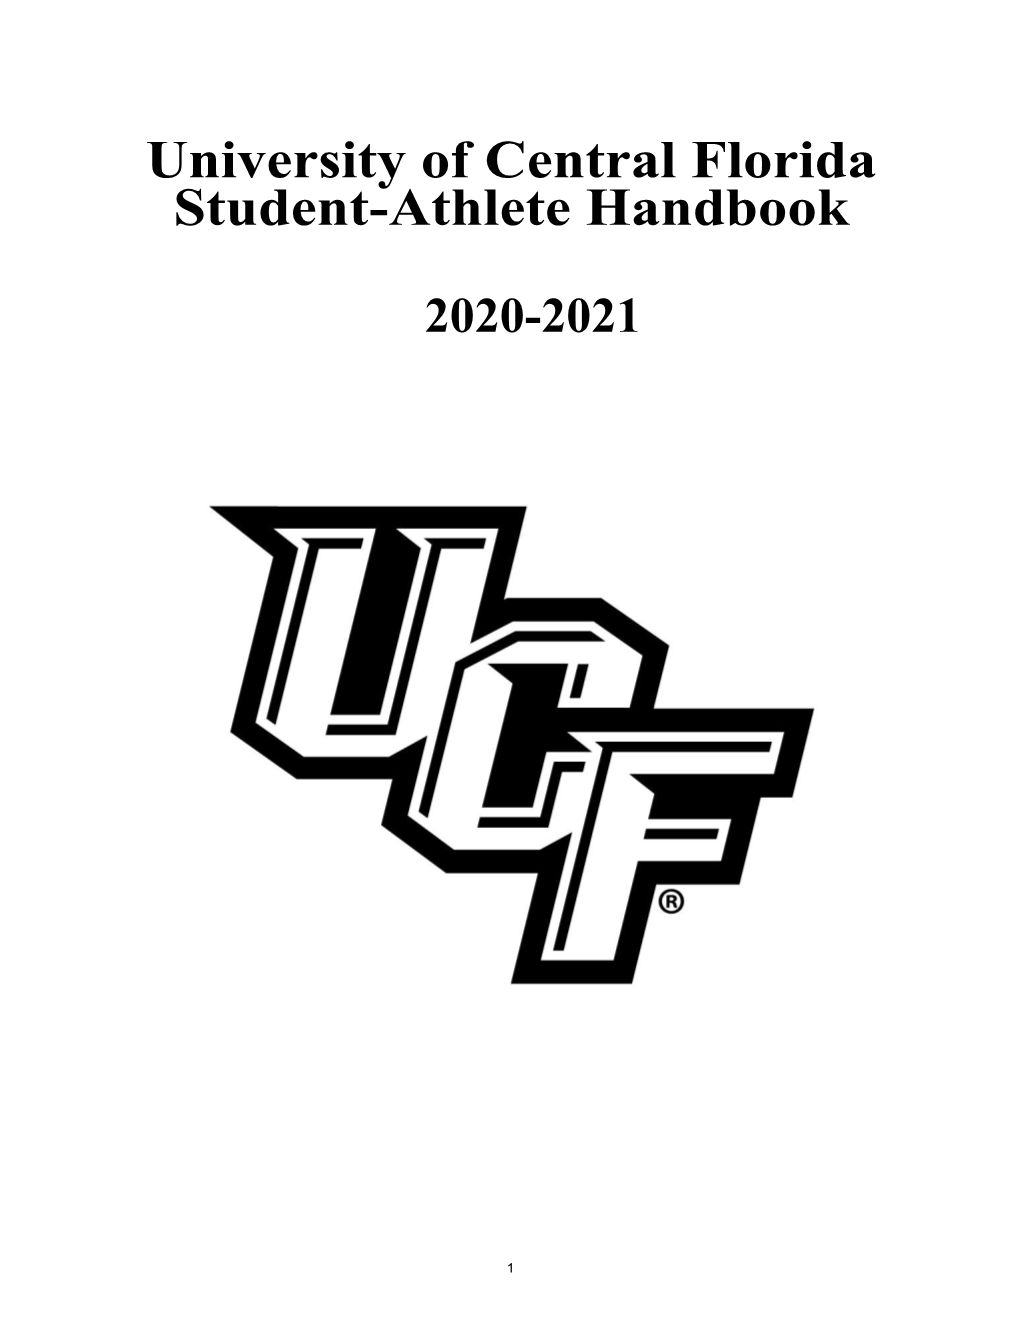 University of Central Florida Student-Athlete Handbook